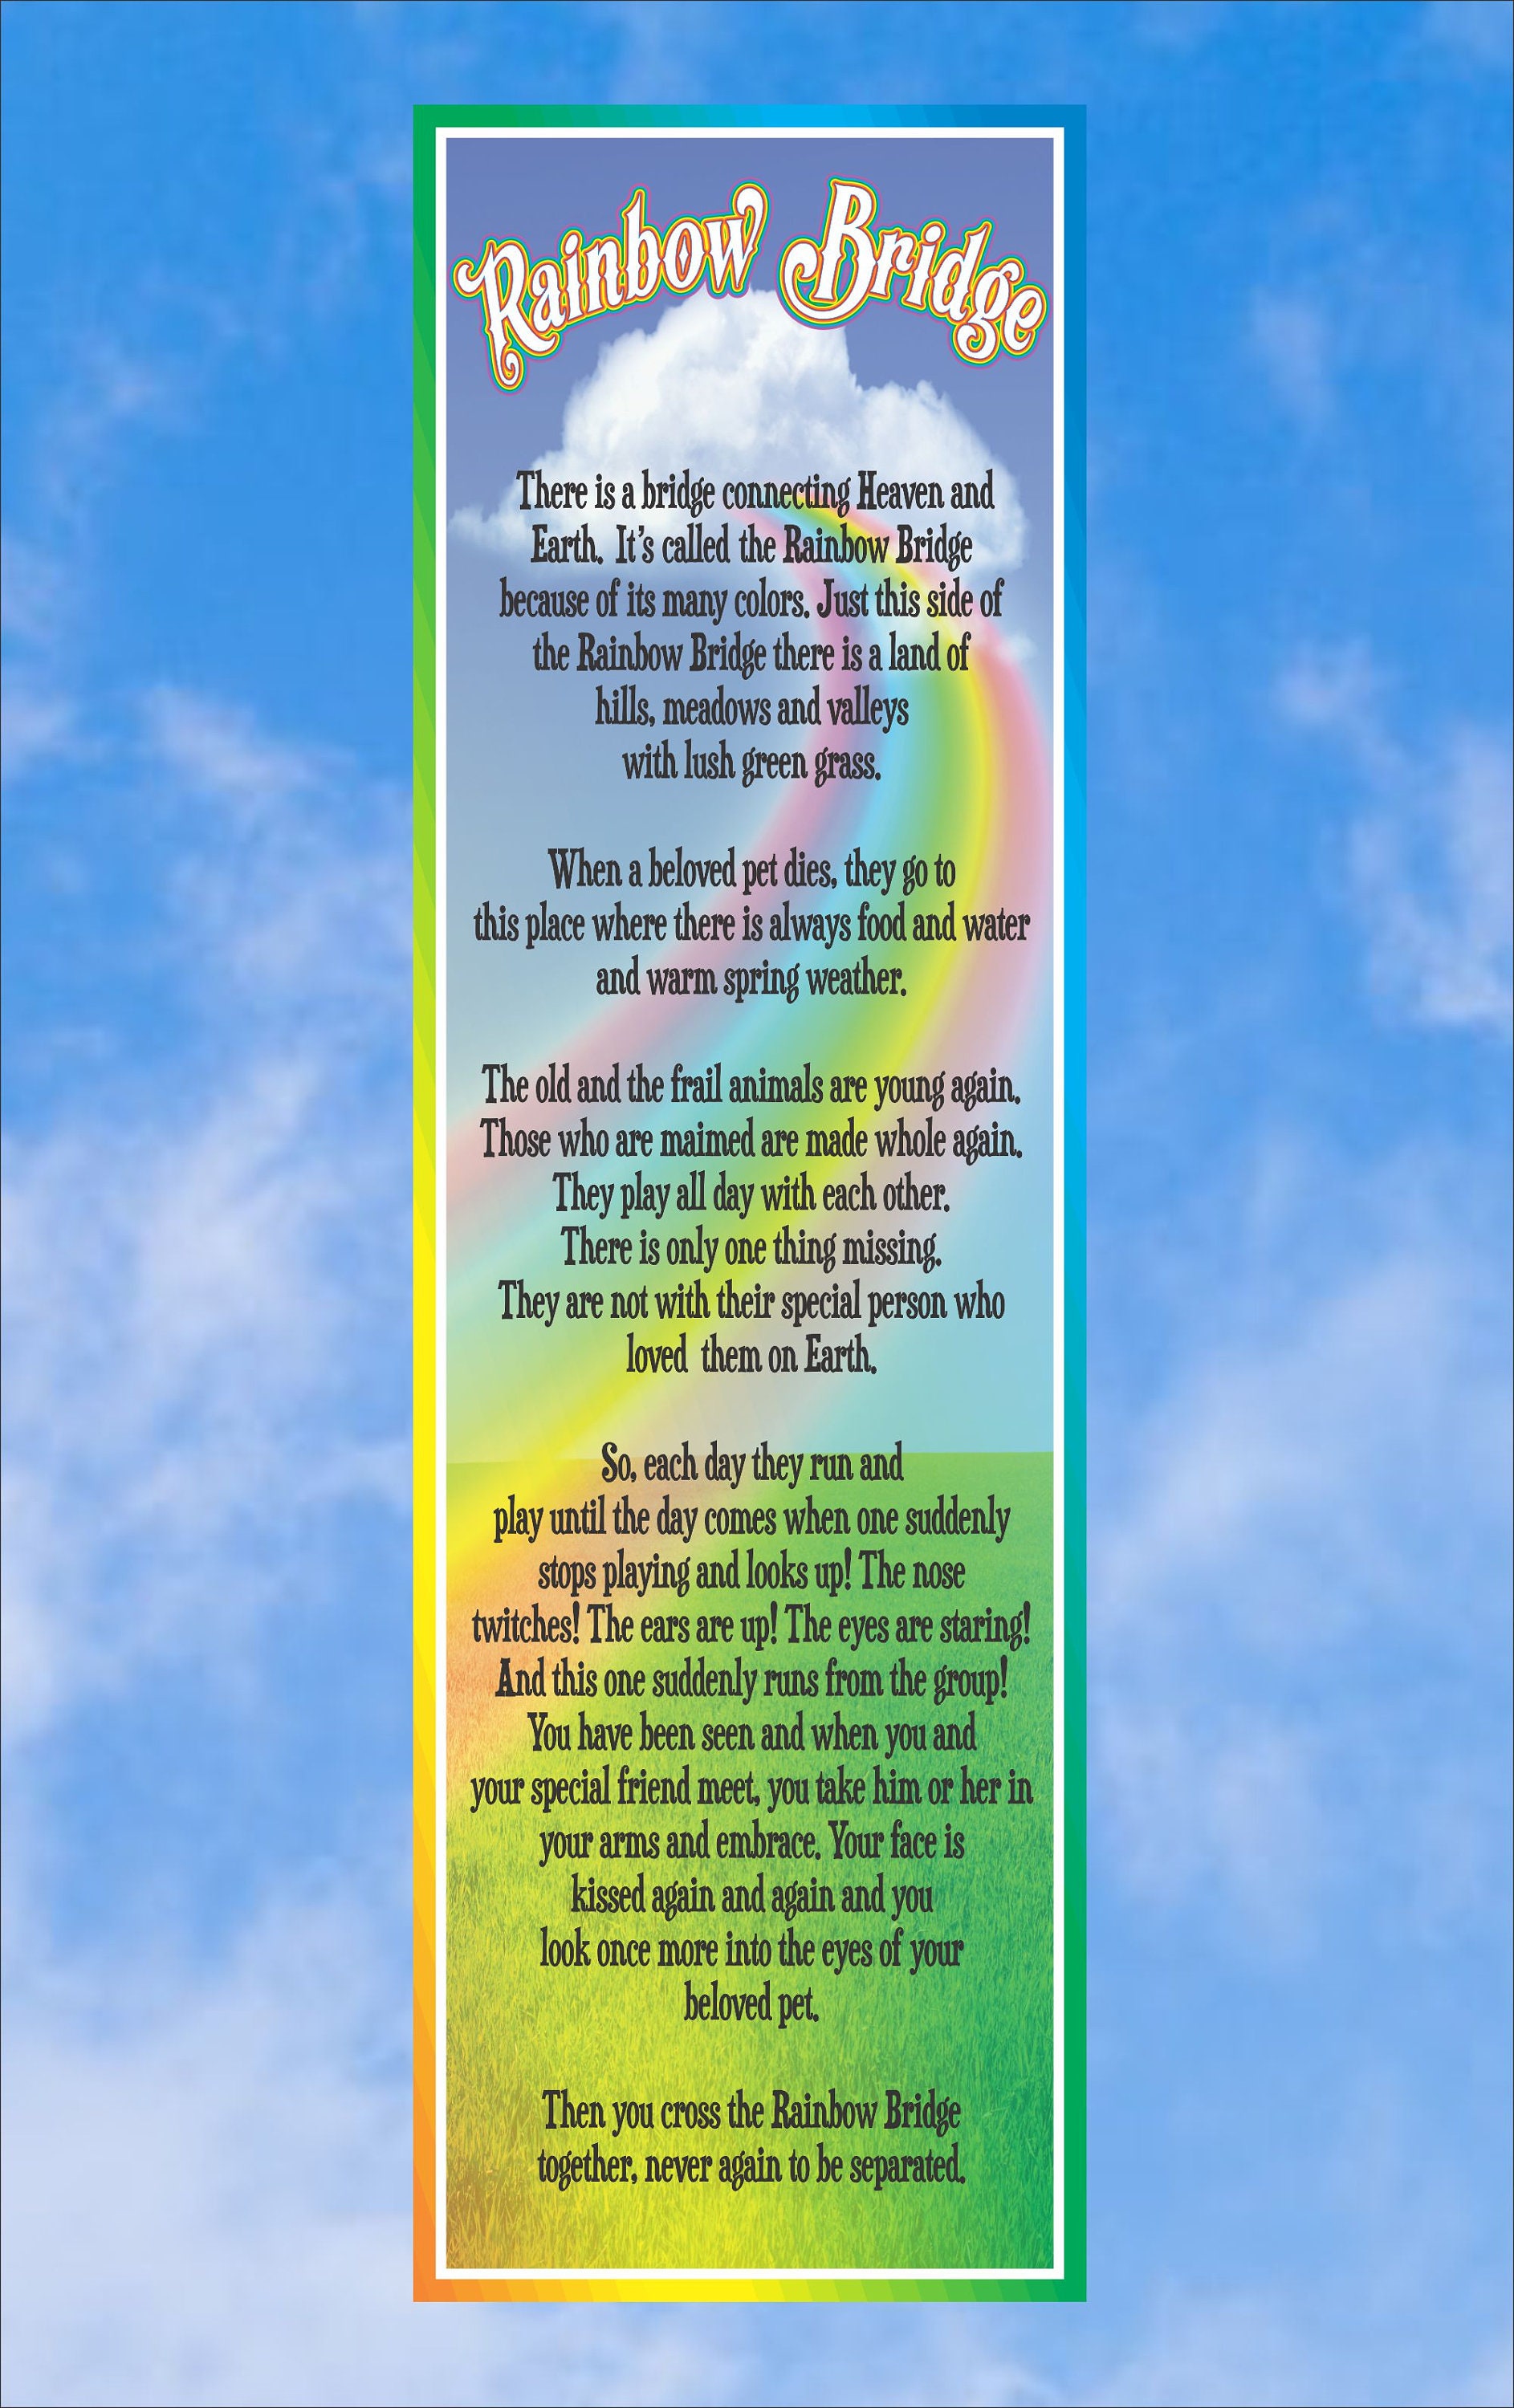 Personalized Pet Memorial Poem The Rainbow Bridge For Loss of Pet